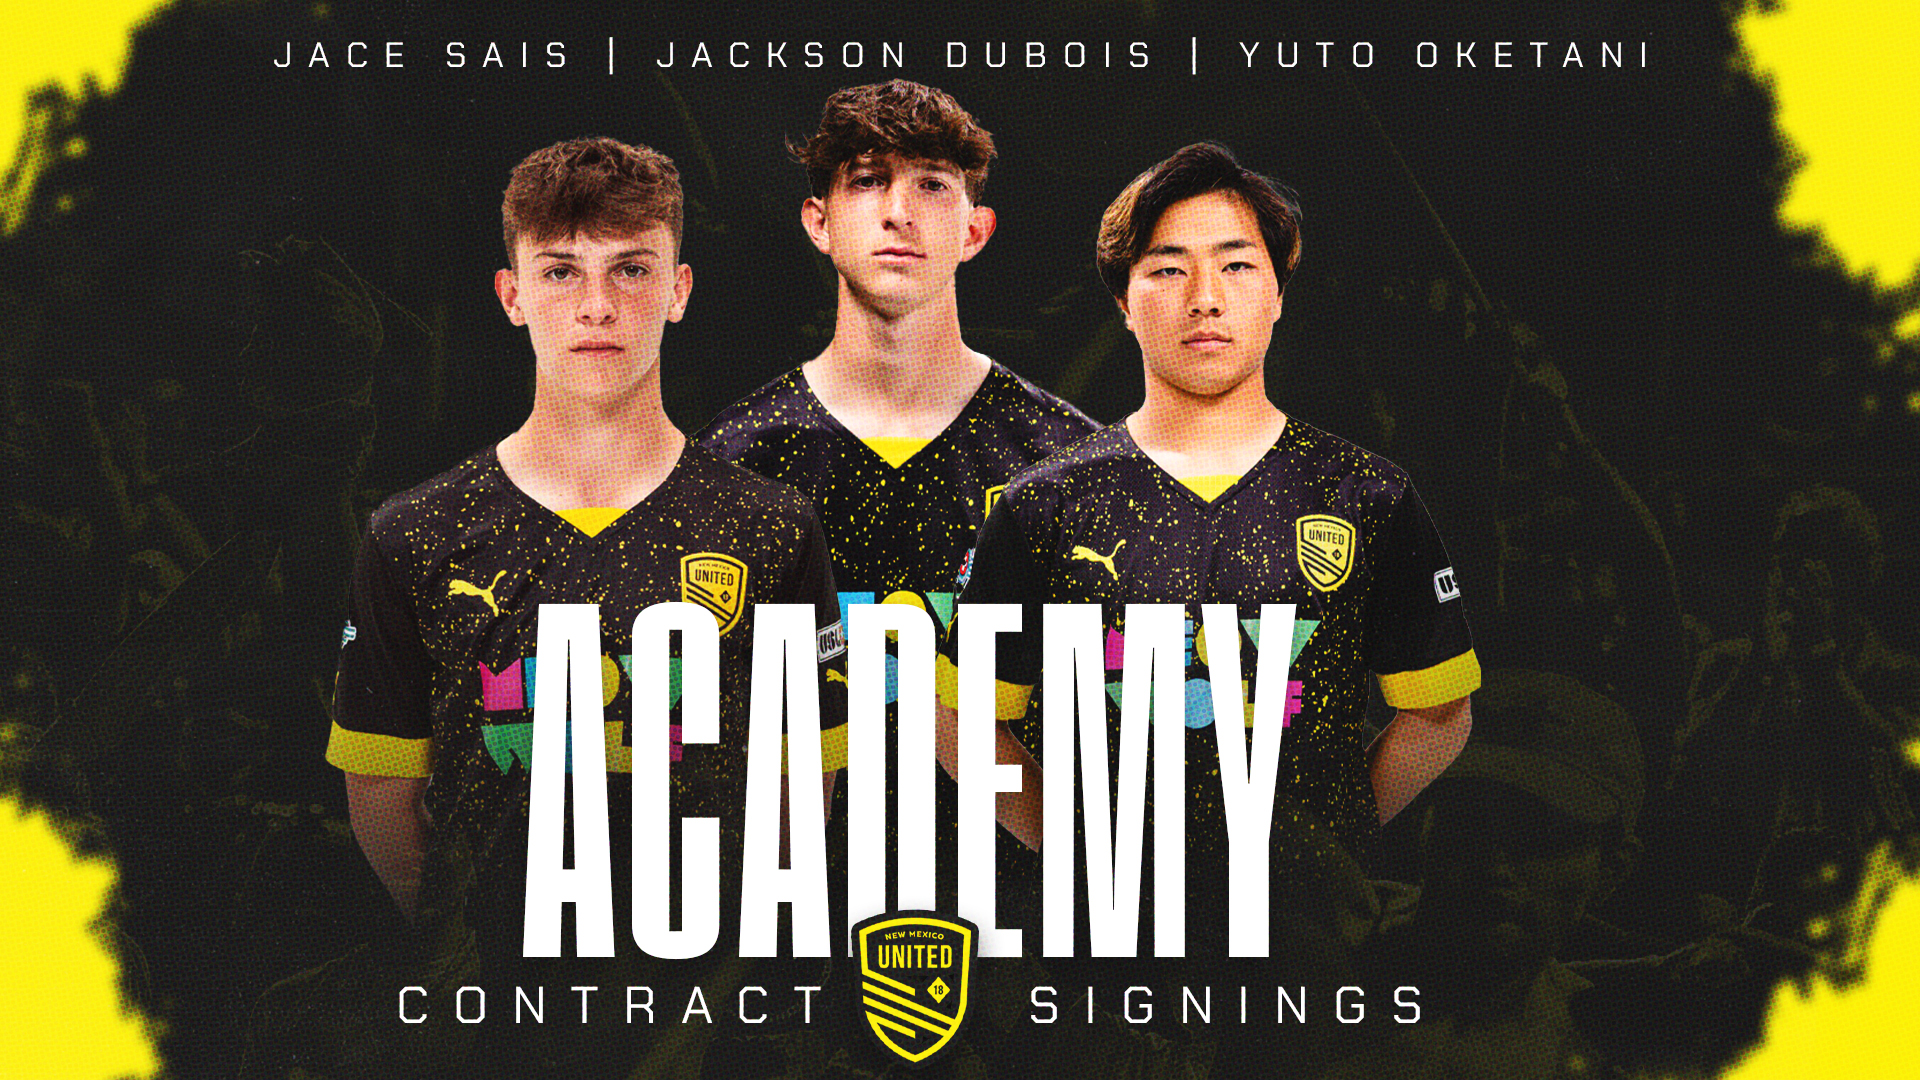 NMU Academy Left to right: Jace Sais, Jackson Dubois, Yuto Oketani